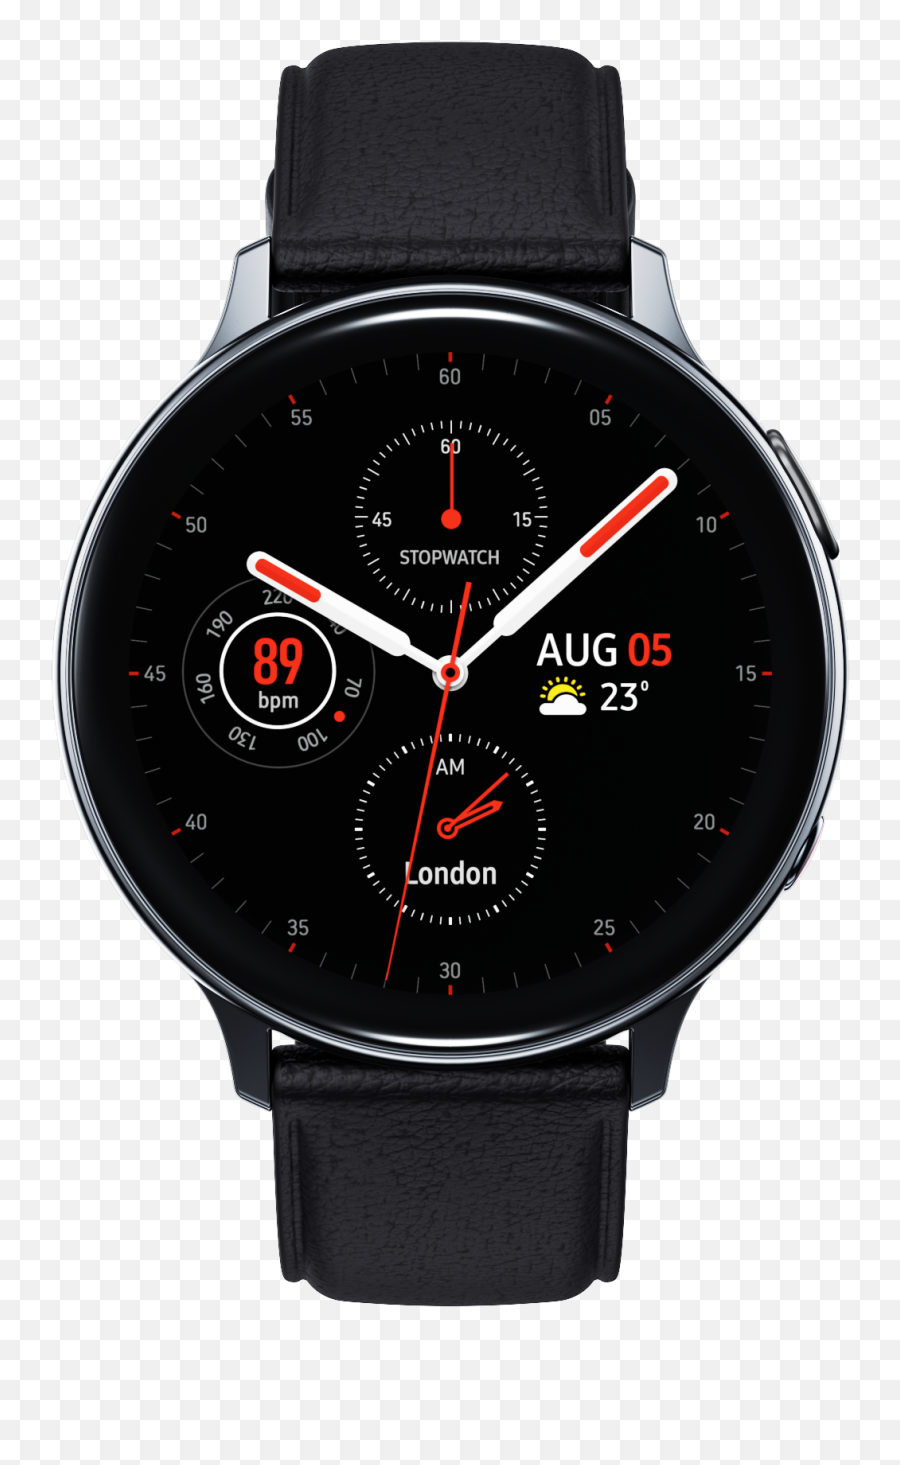 Samsung Galaxy Watch Active 2 Aluminum - Samsung Galaxy Watch Active 2 4g Emoji,Find The Emoji Level 45